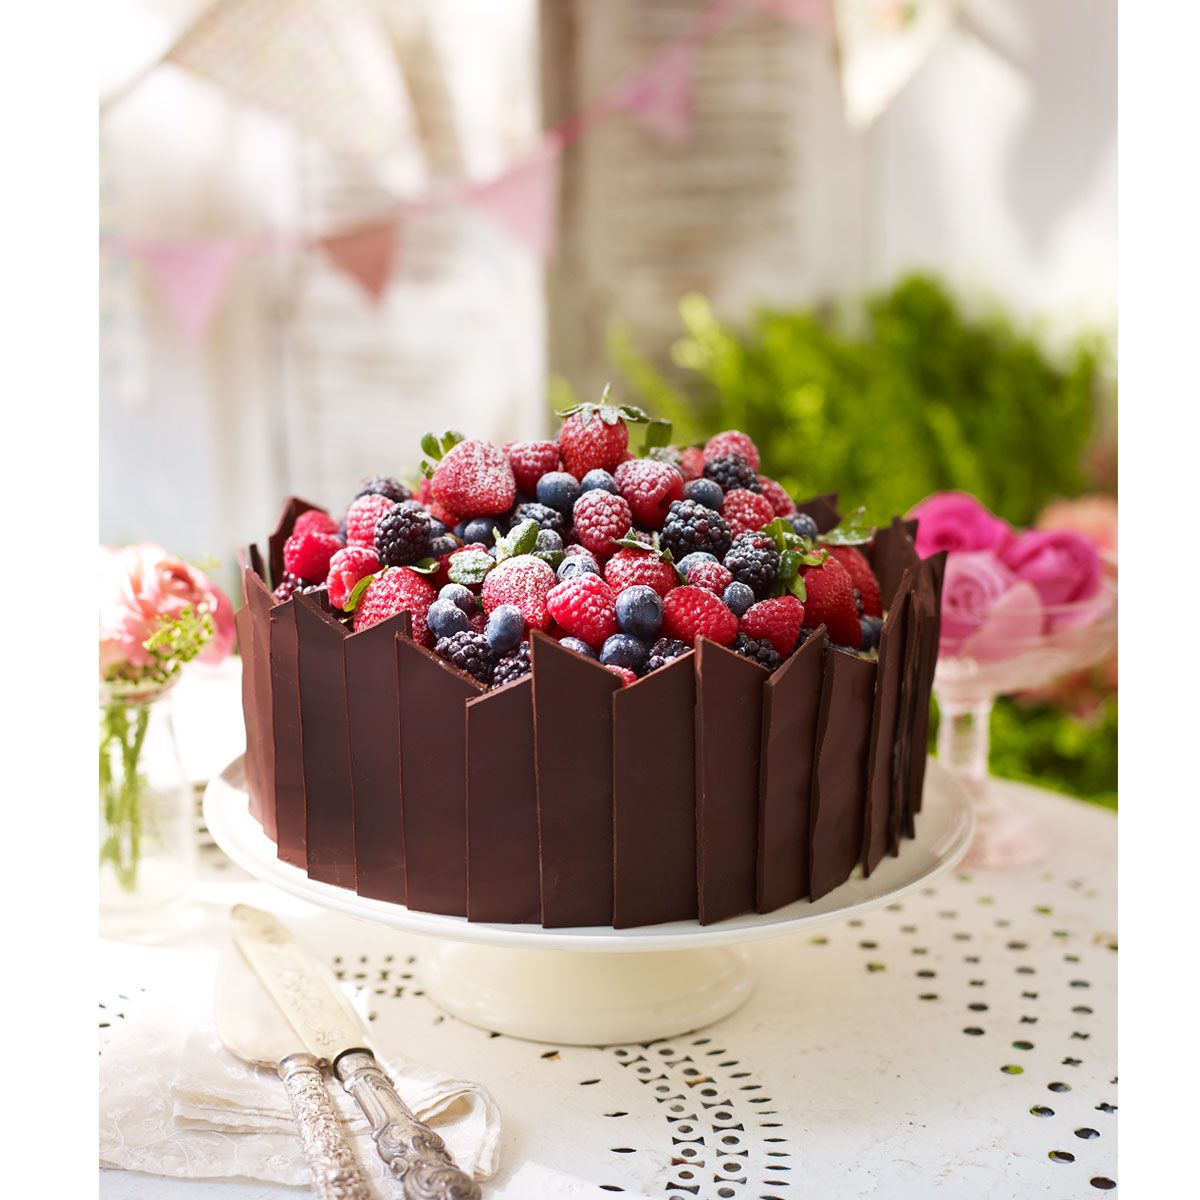 Why We Celebrate Birthdays With Cake | Patisserie Valerie